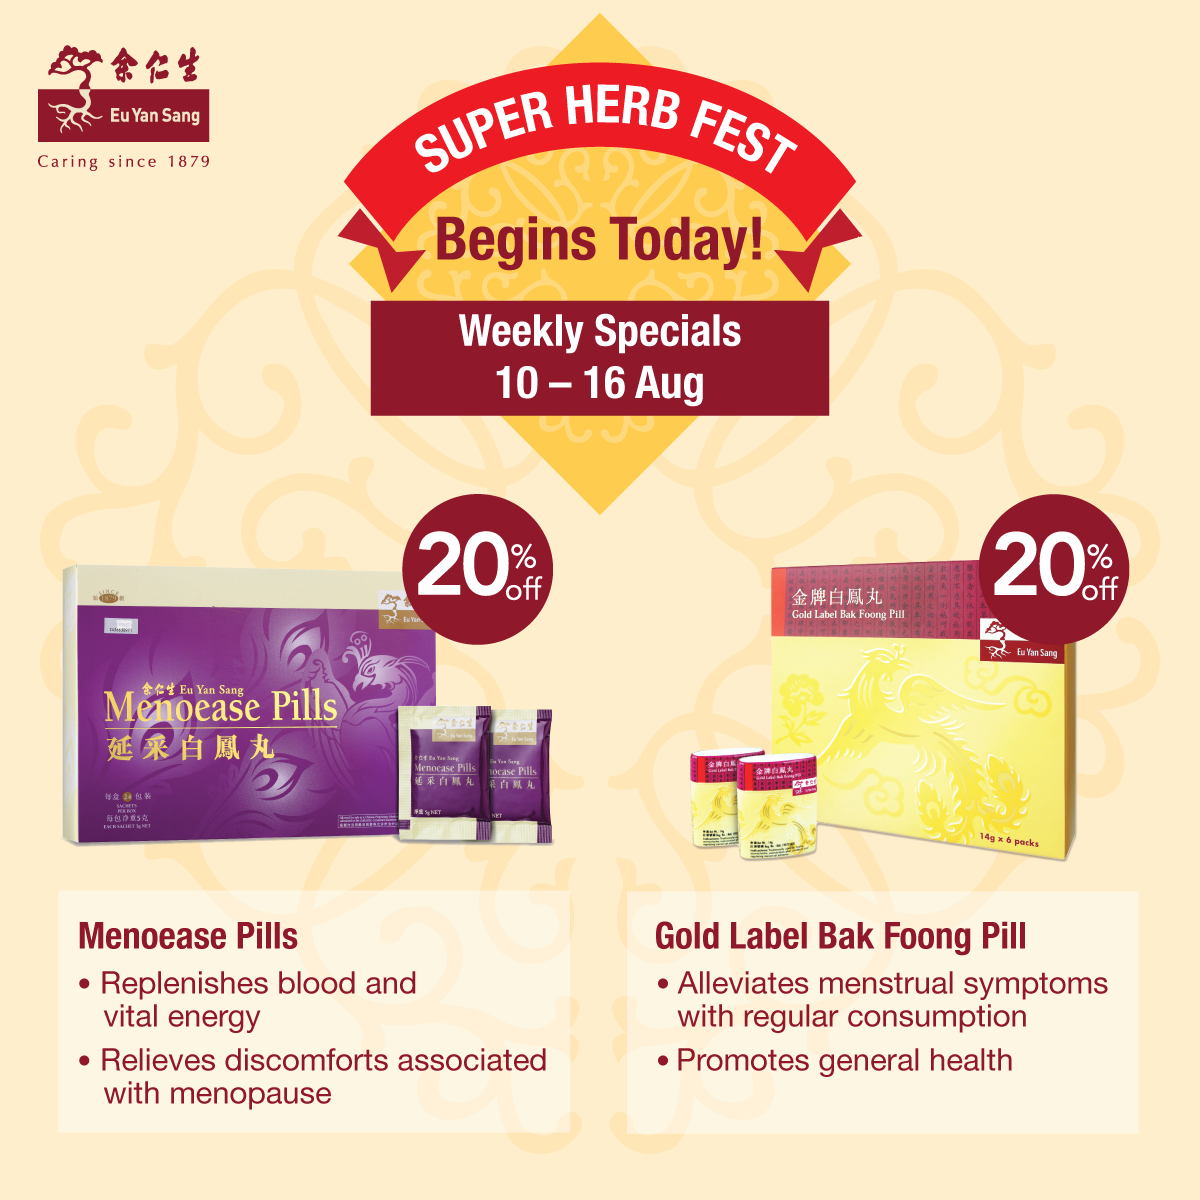 Eu Yan Sang Super Herb Fest Singapore Promotion 10 to 16 Aug 2016